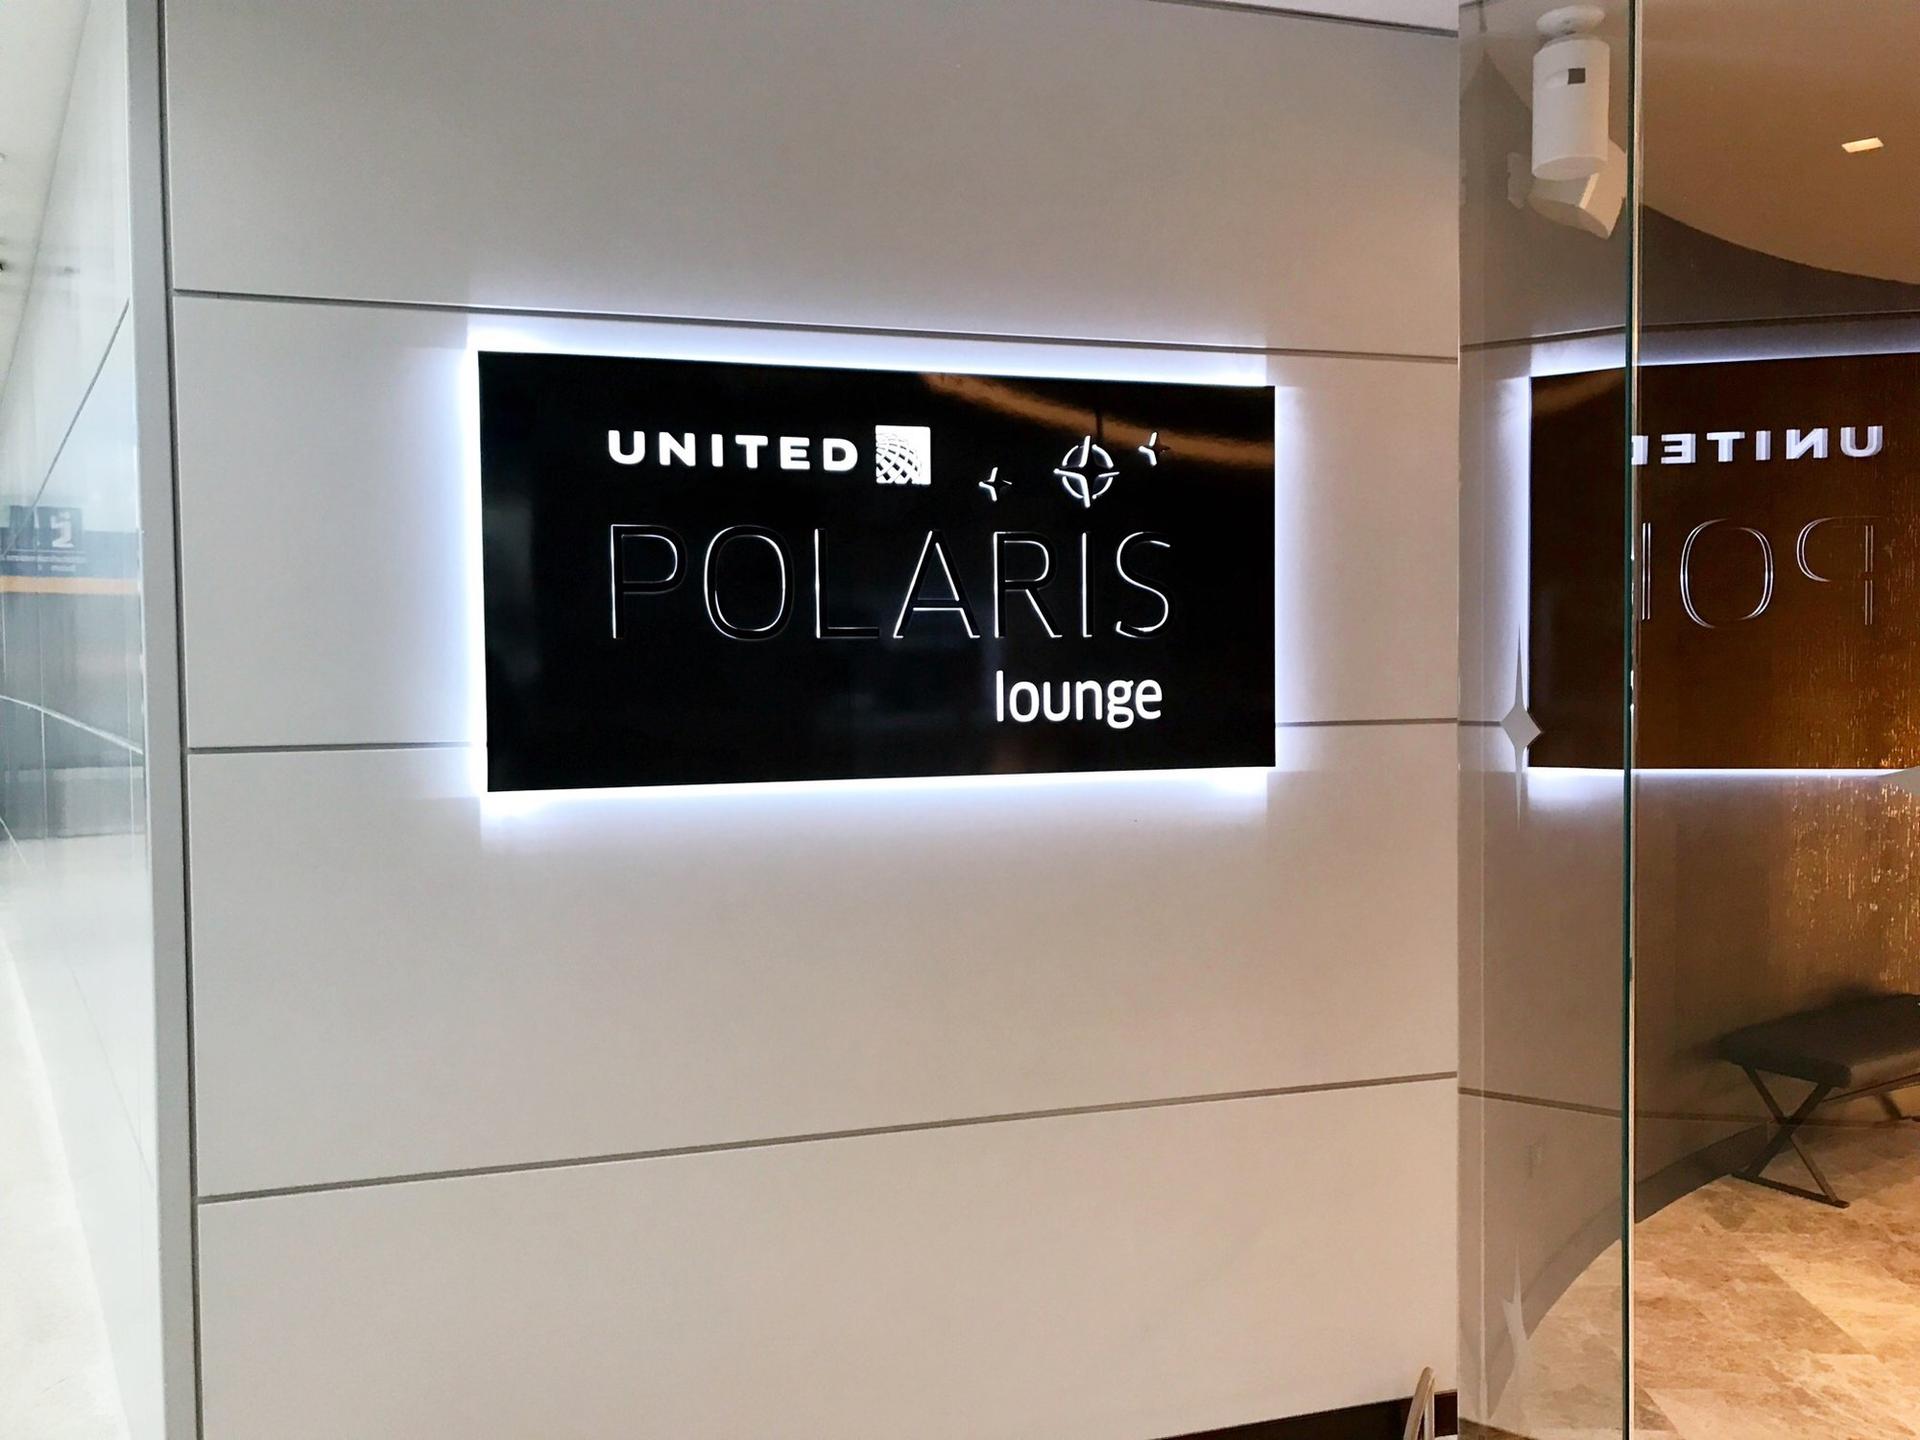 United Airlines Polaris Lounge image 4 of 13